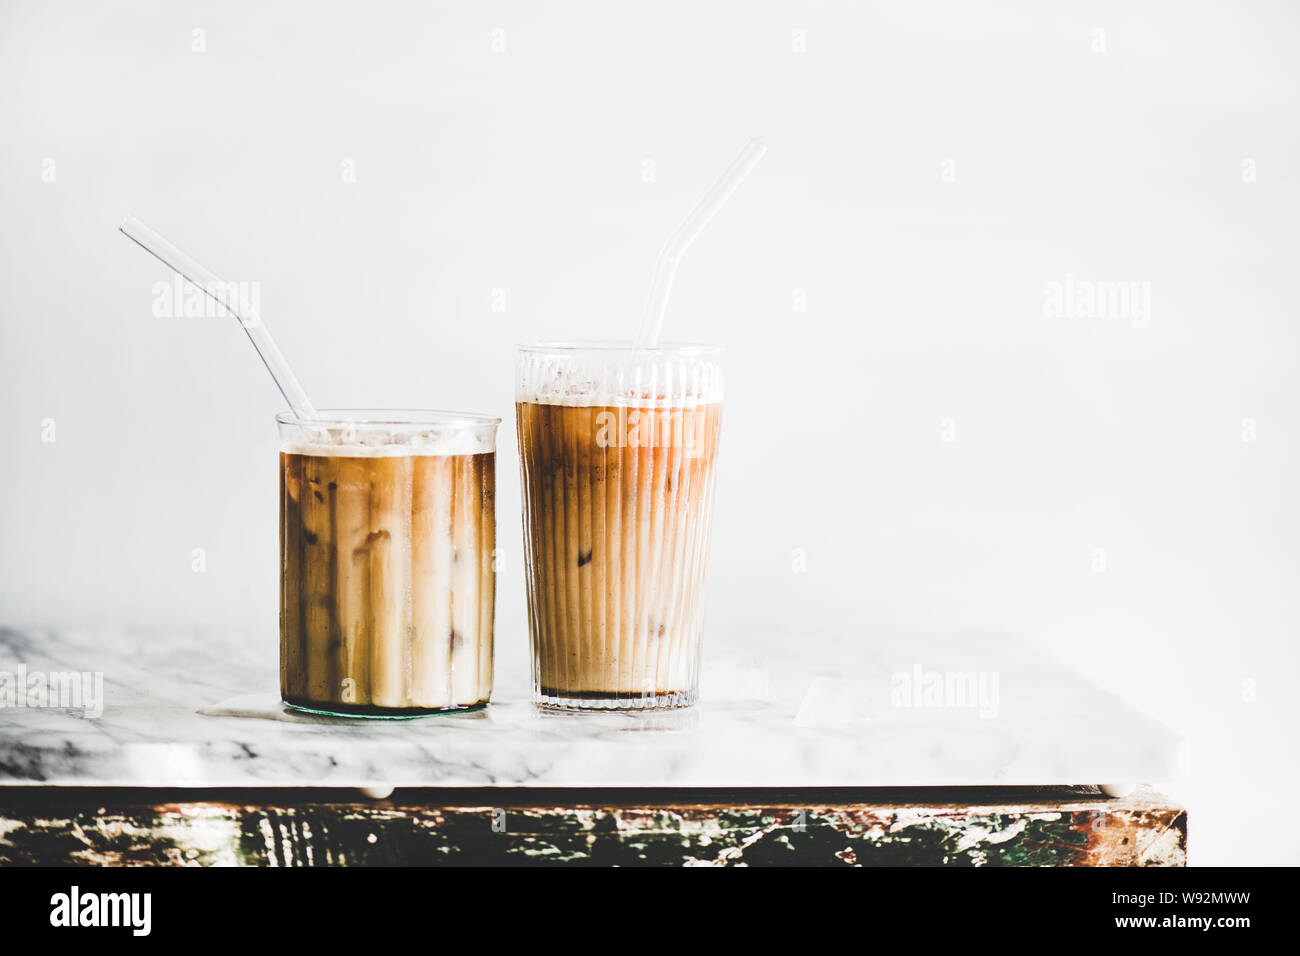 https://c8.alamy.com/comp/W92MWW/iced-latte-coffee-in-glasses-with-straws-whate-wall-background-W92MWW.jpg